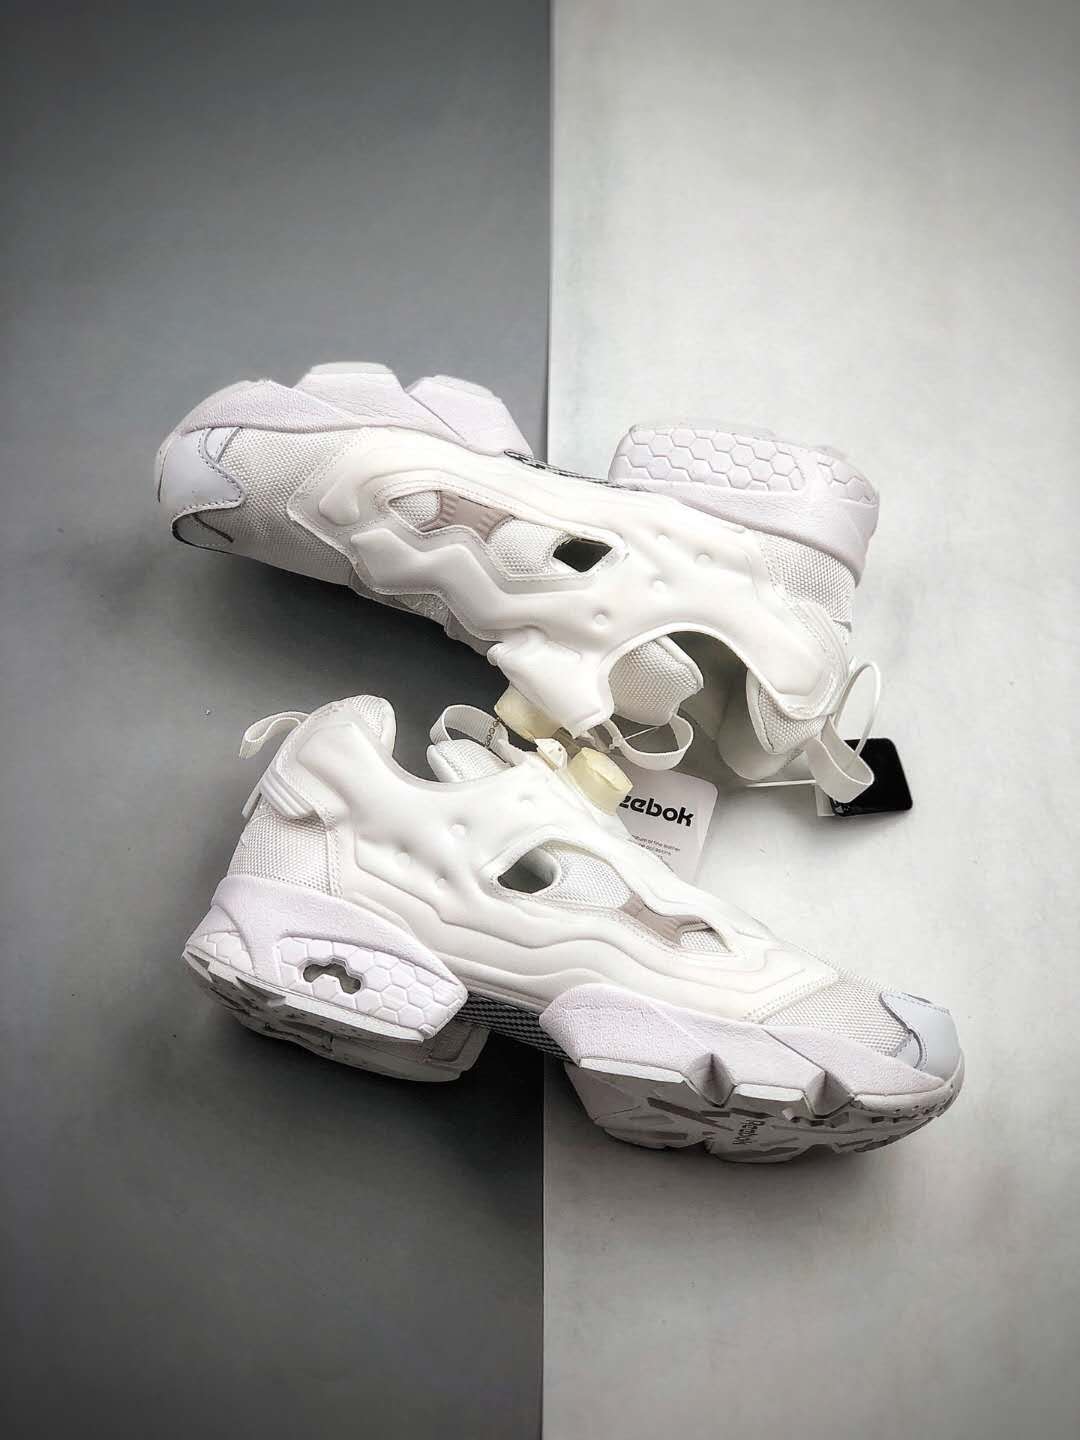 Reebok InstaPump Fury OG 'White' AR2199 - Stylish & Comfortable Footwear